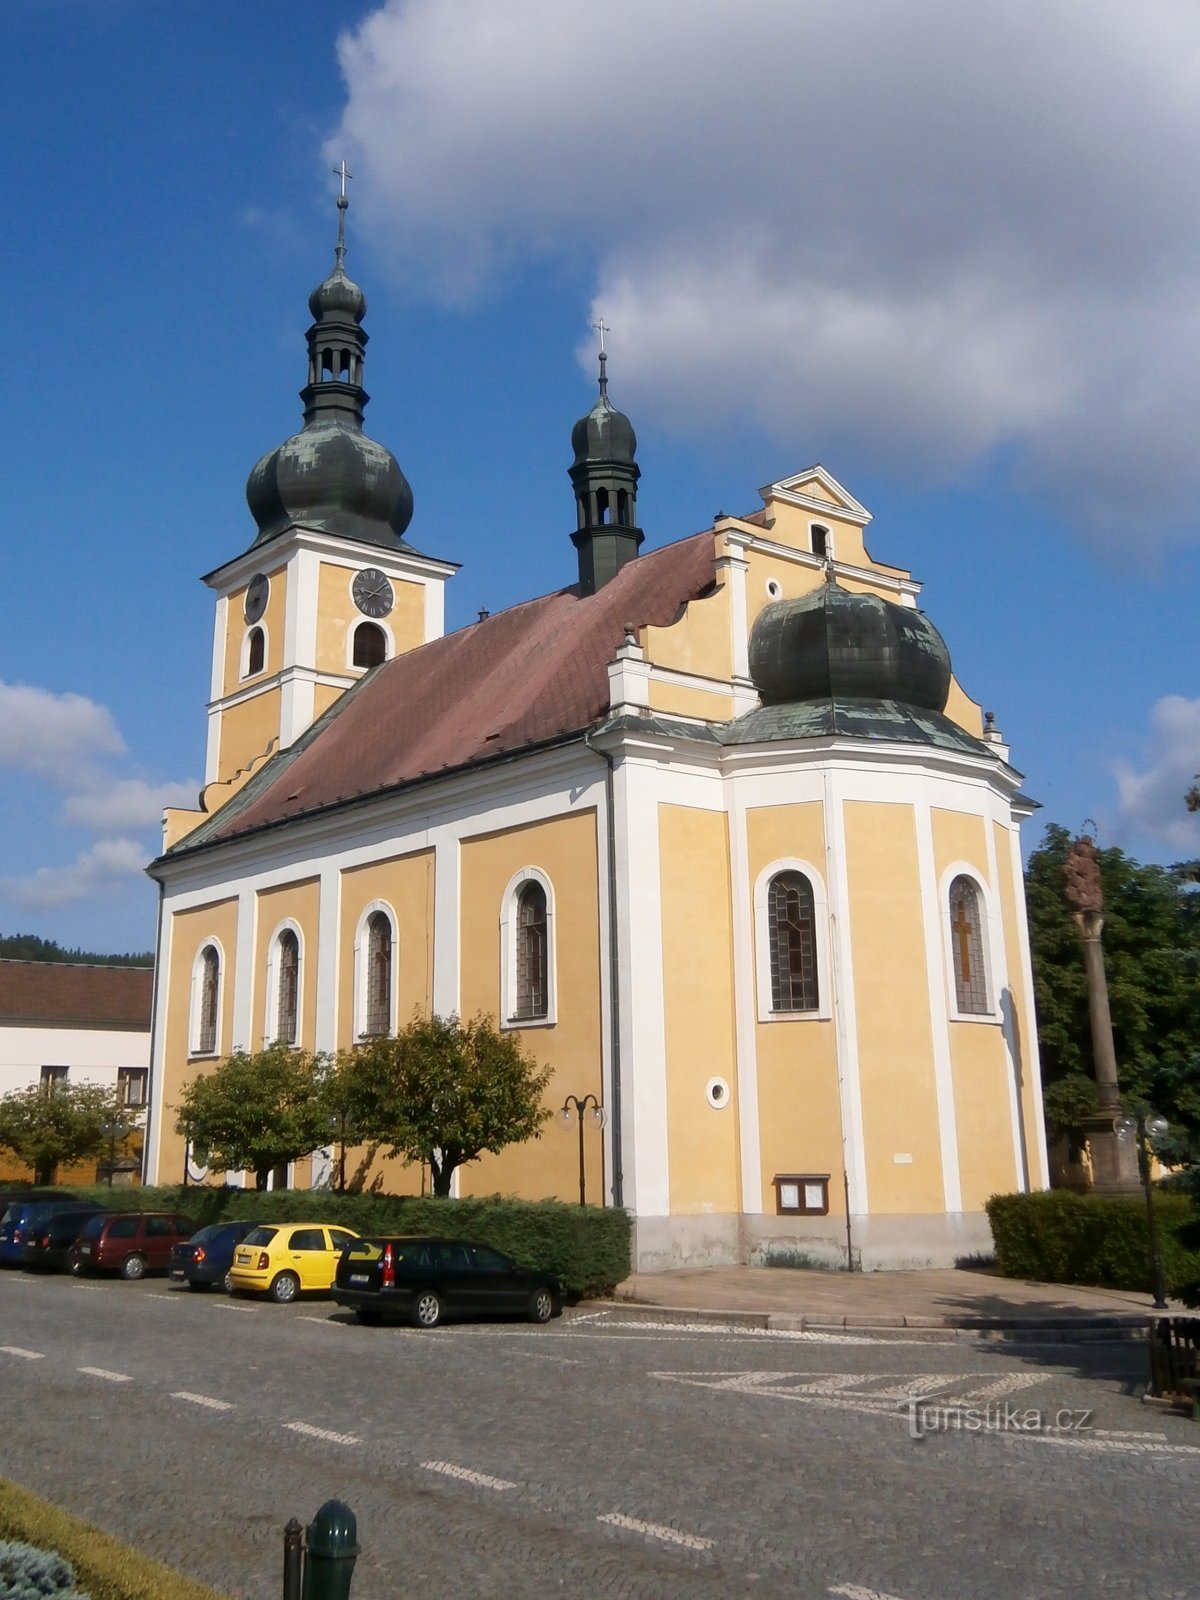 Church of St. Jakub (Úpice, 6.7.2017 July XNUMX)